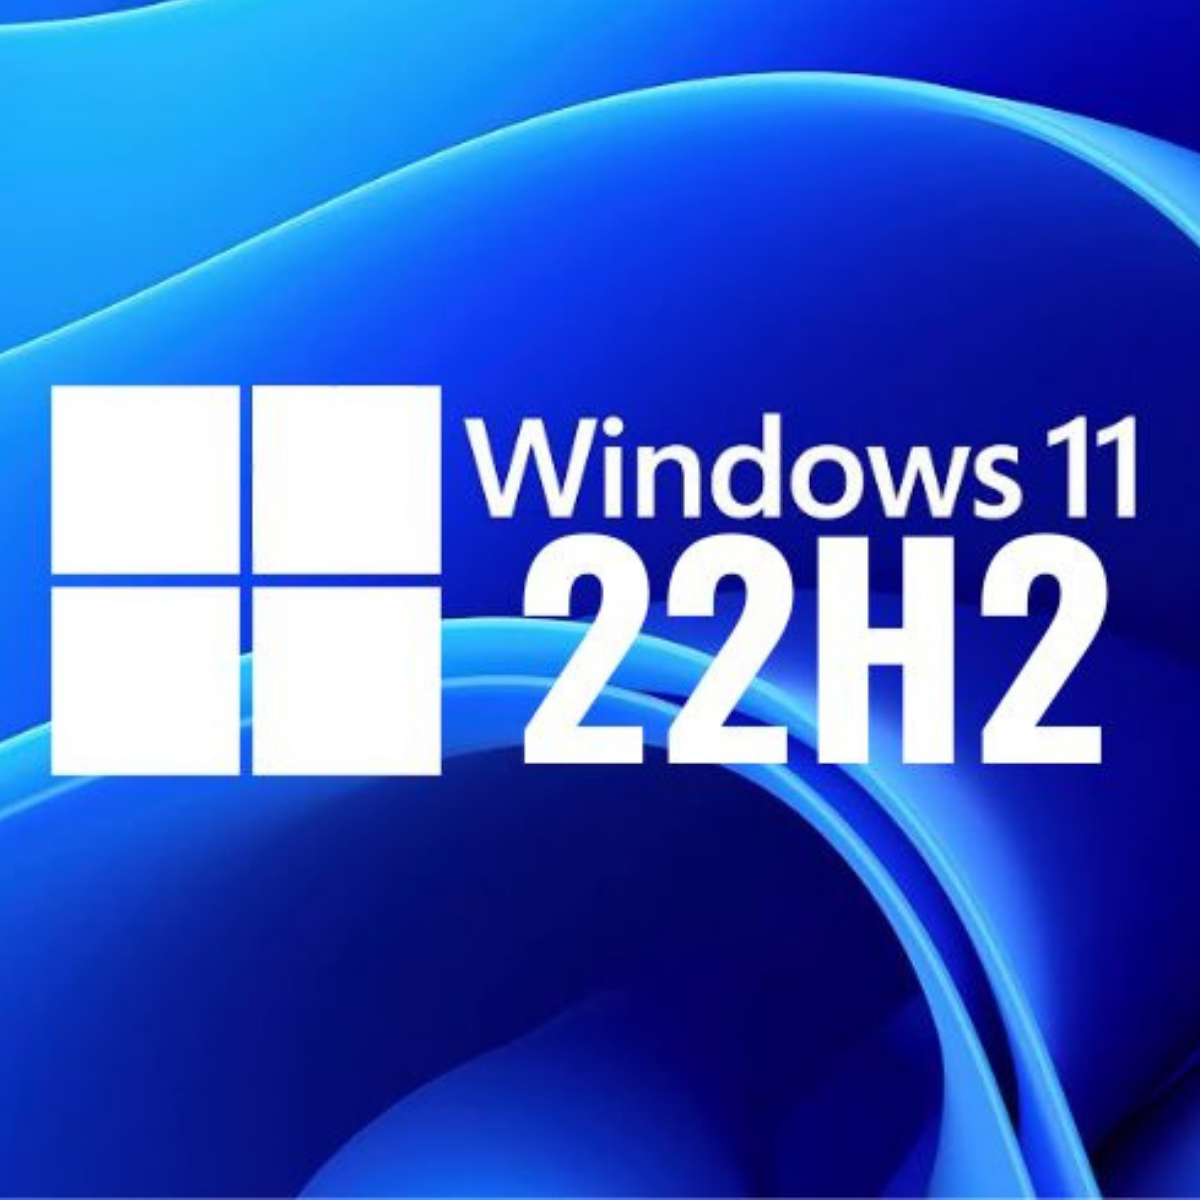 Windows 11 фото. Windows 11, Version 22h2. Windows 22. Виндовс 13. Windows channel